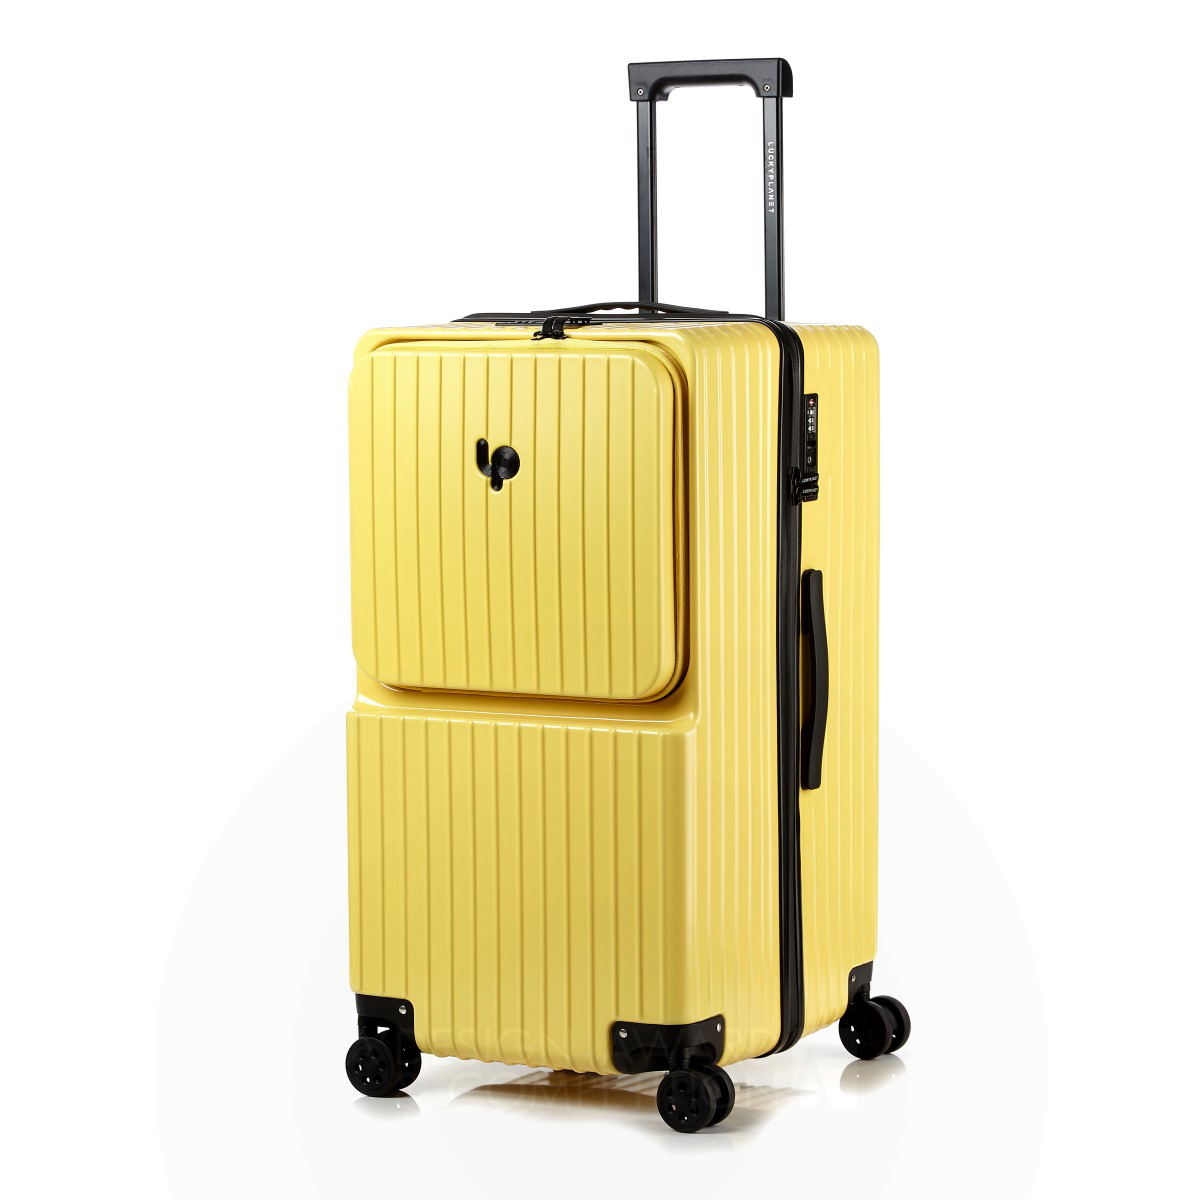 Go Beyond S2 <b>Travel Luggage